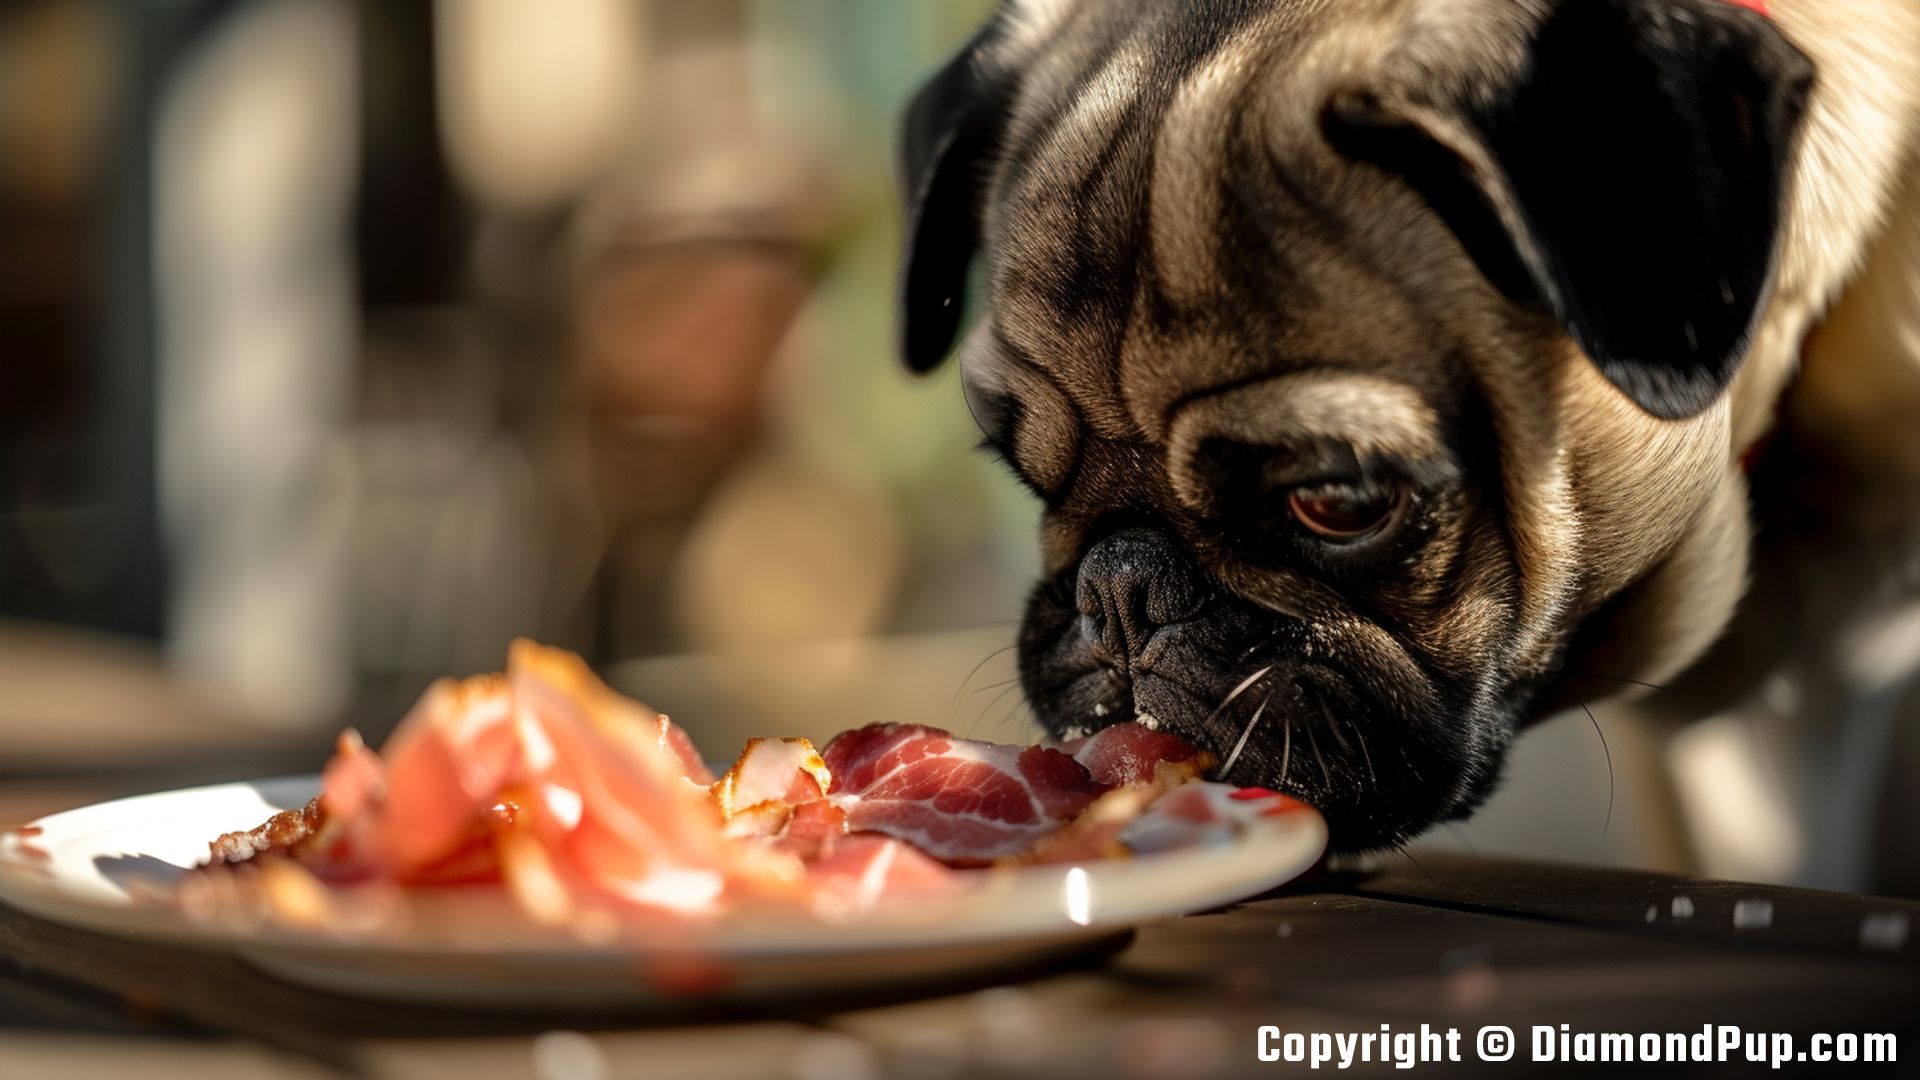 Photograph of an Adorable Pug Eating Bacon